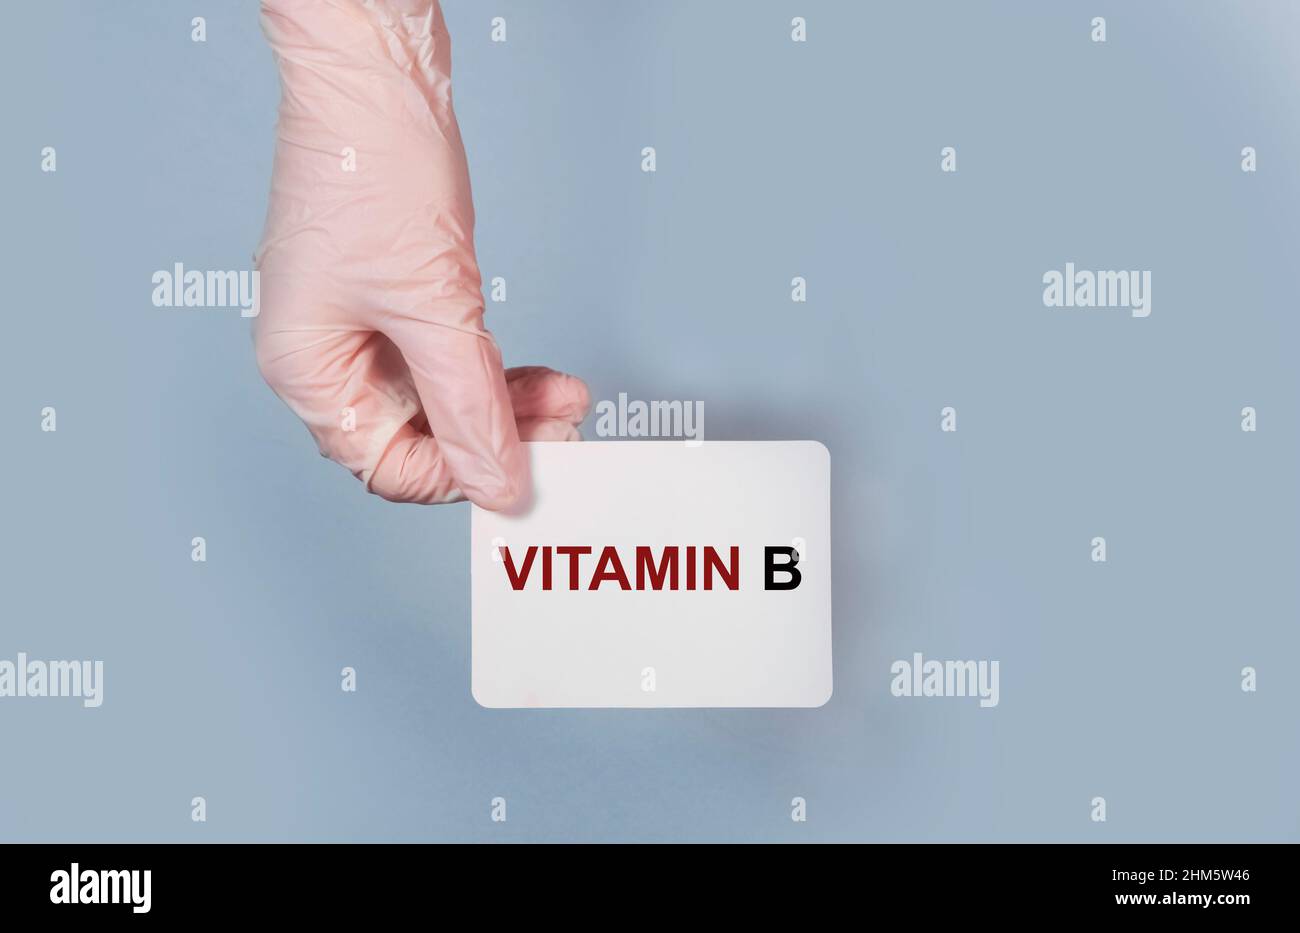 Vitamin B text on paper. health concept. Photo Stock Photo